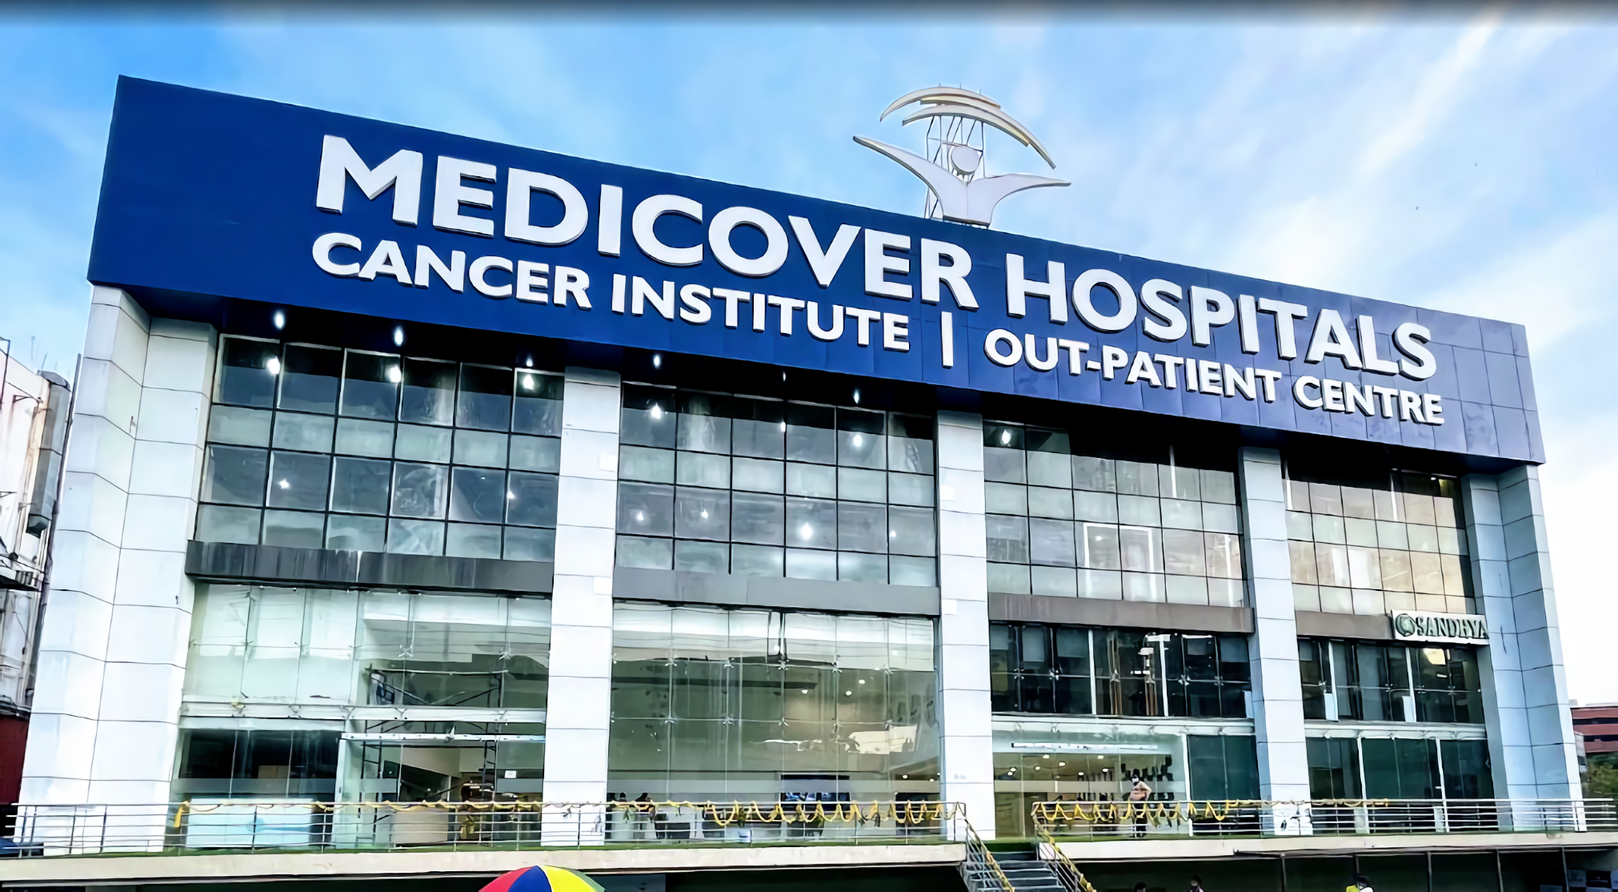 Medicover Cancer Institute photo